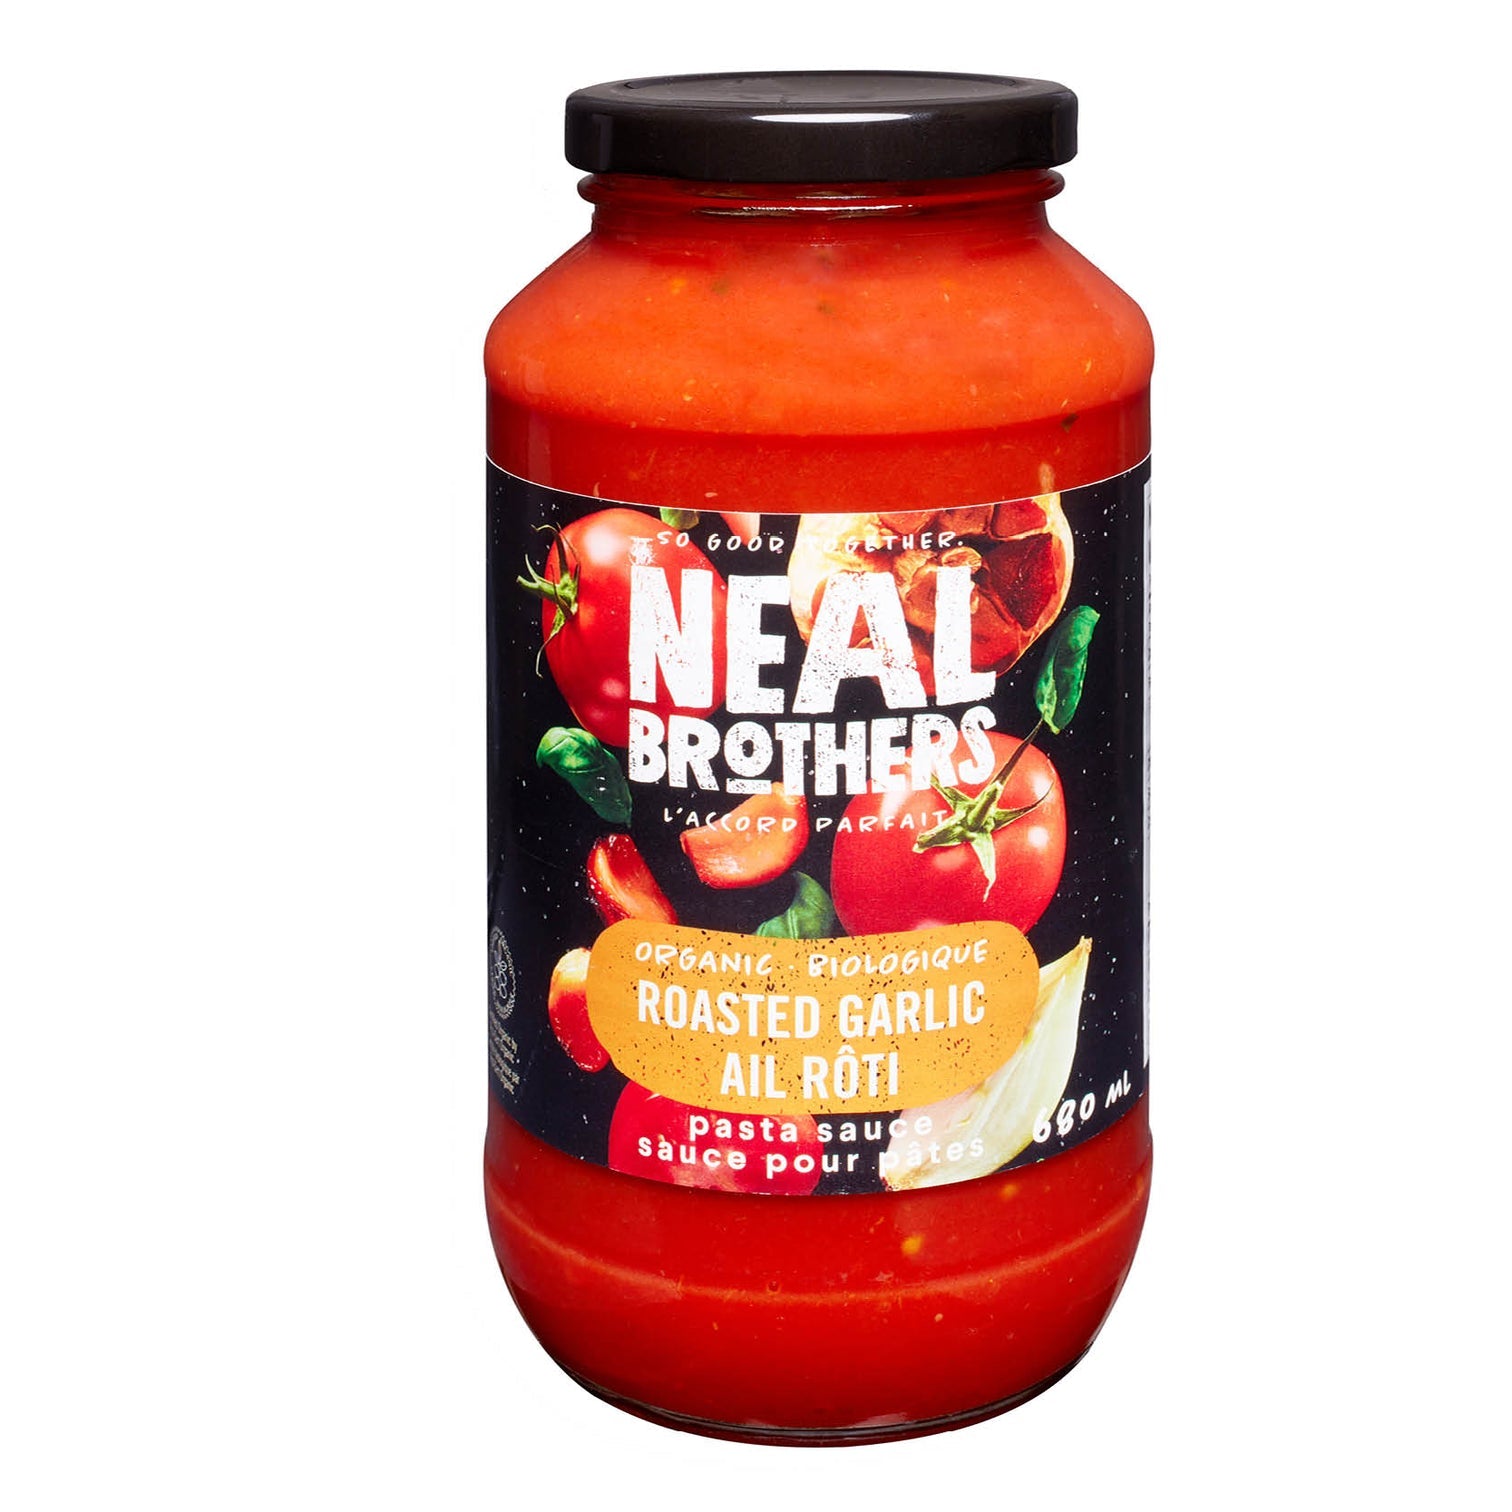 Neal Brothers Organic Pasta Sauce Roasted Garlic